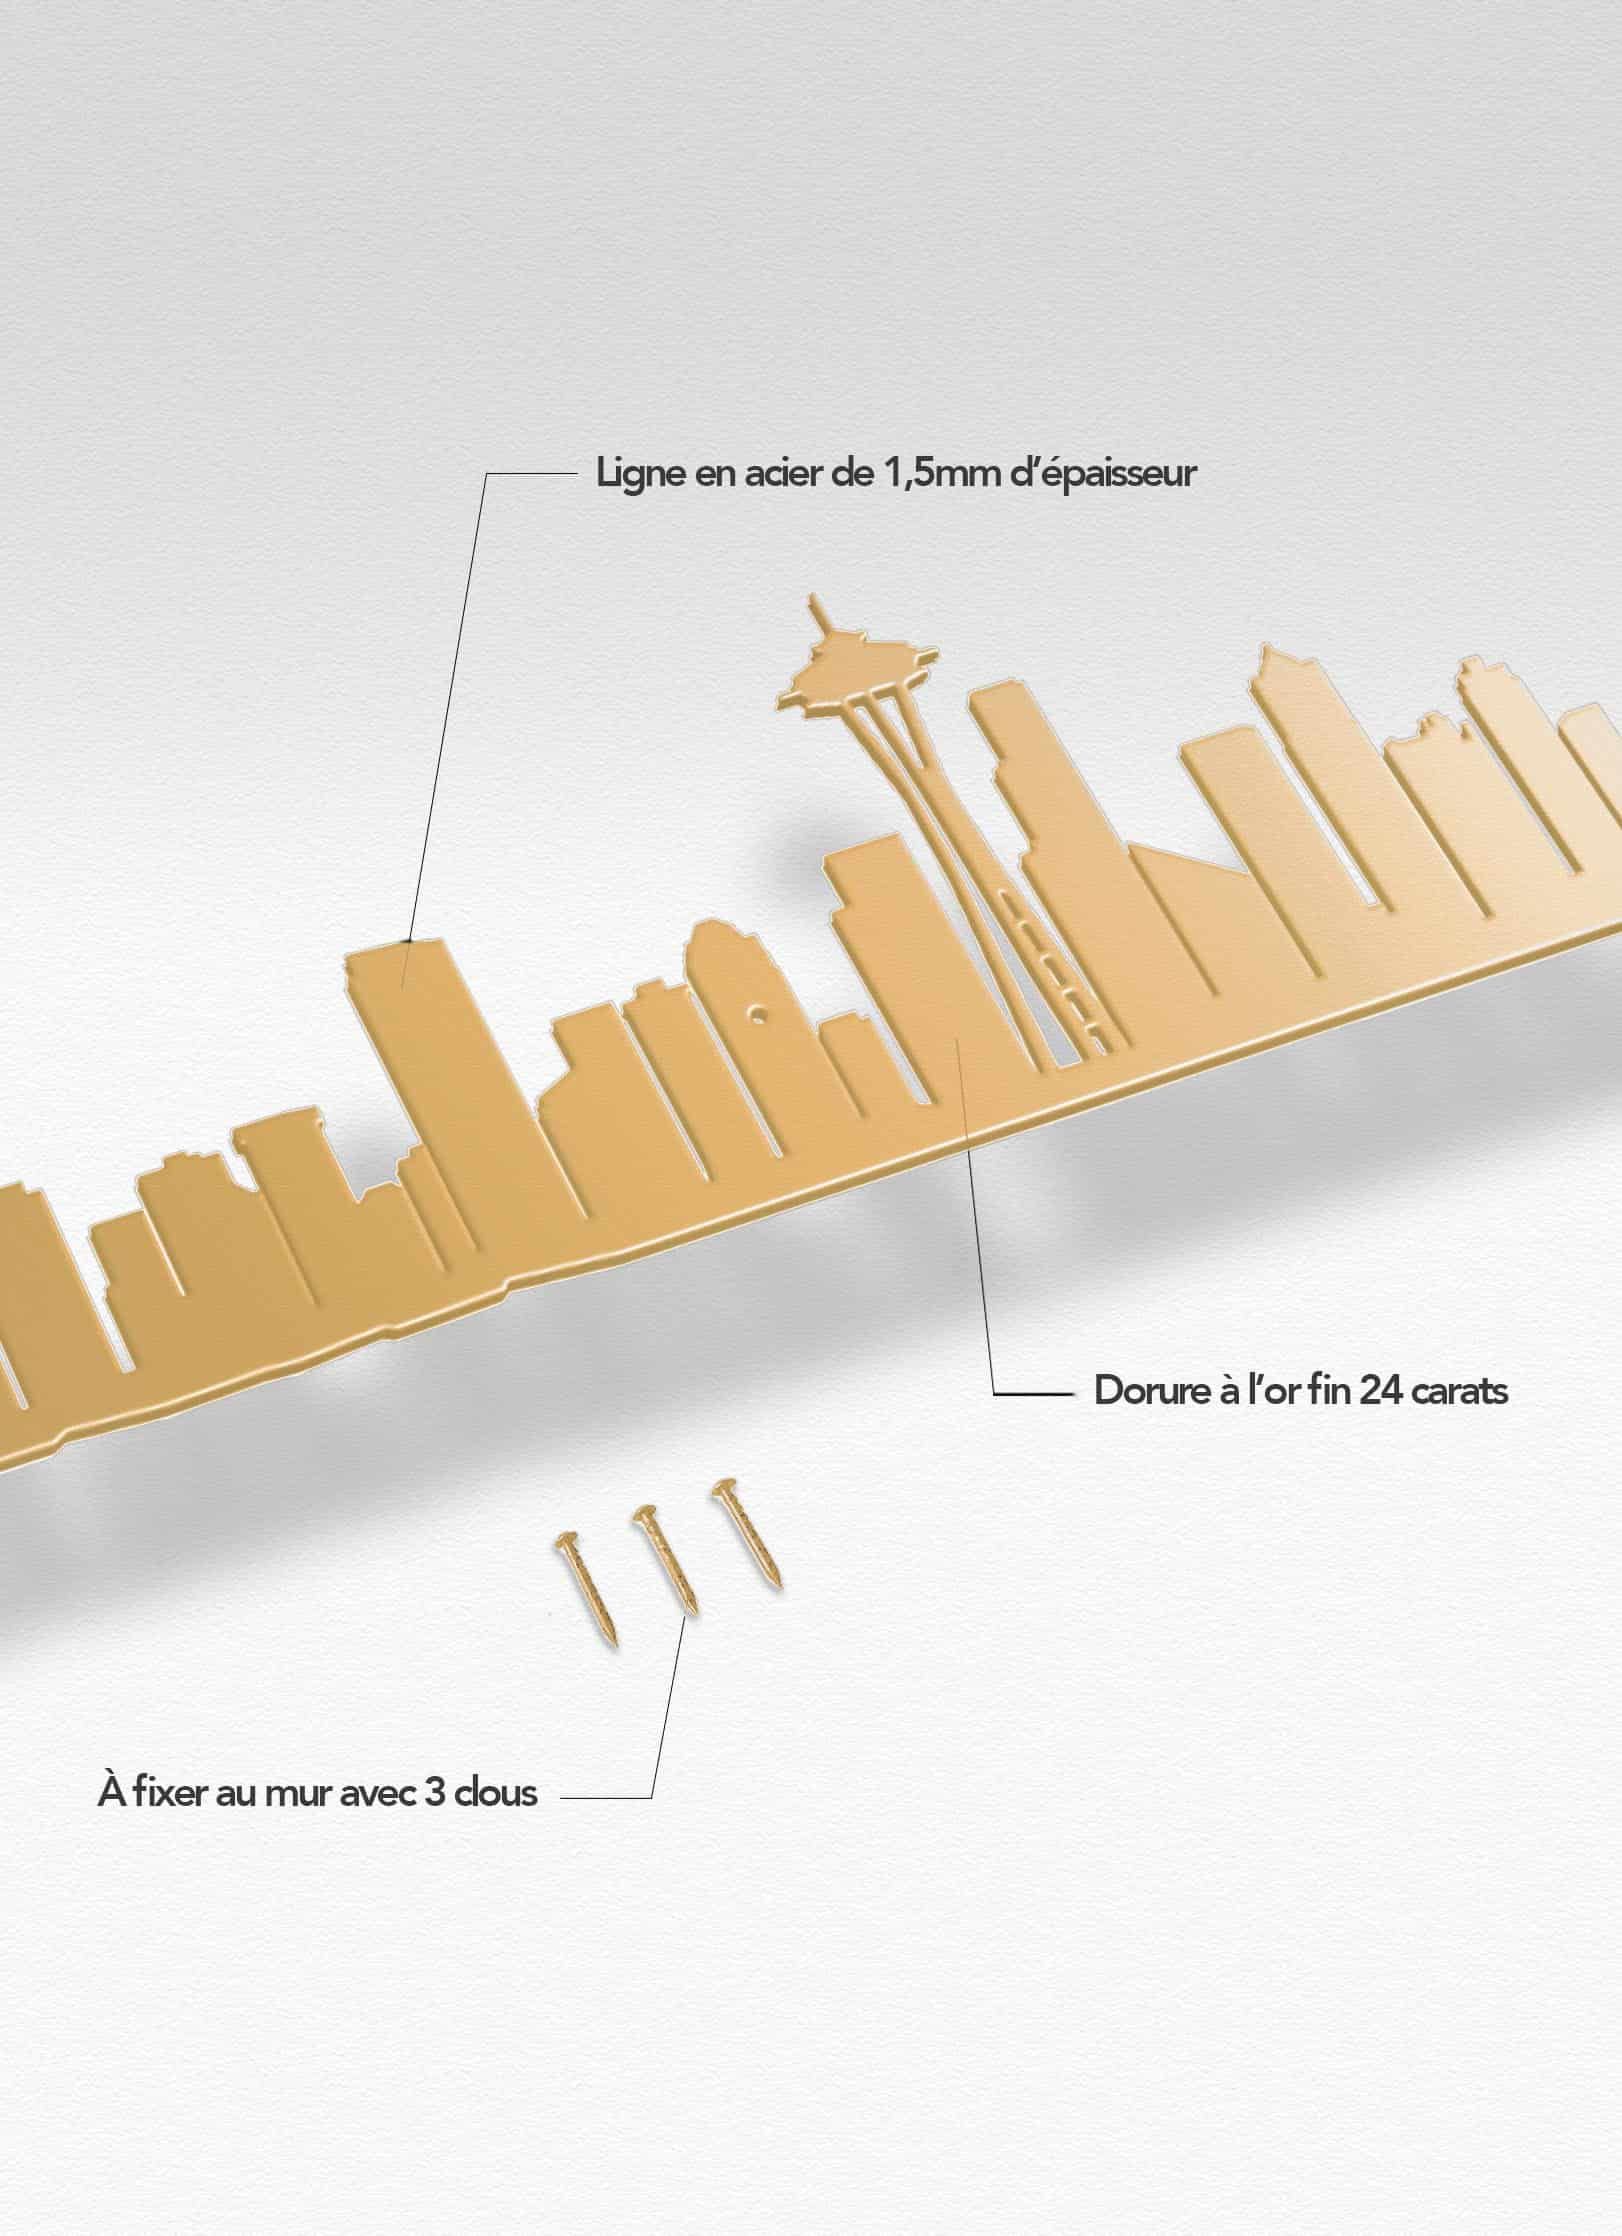 Presentation of the skyline of Seattle doré